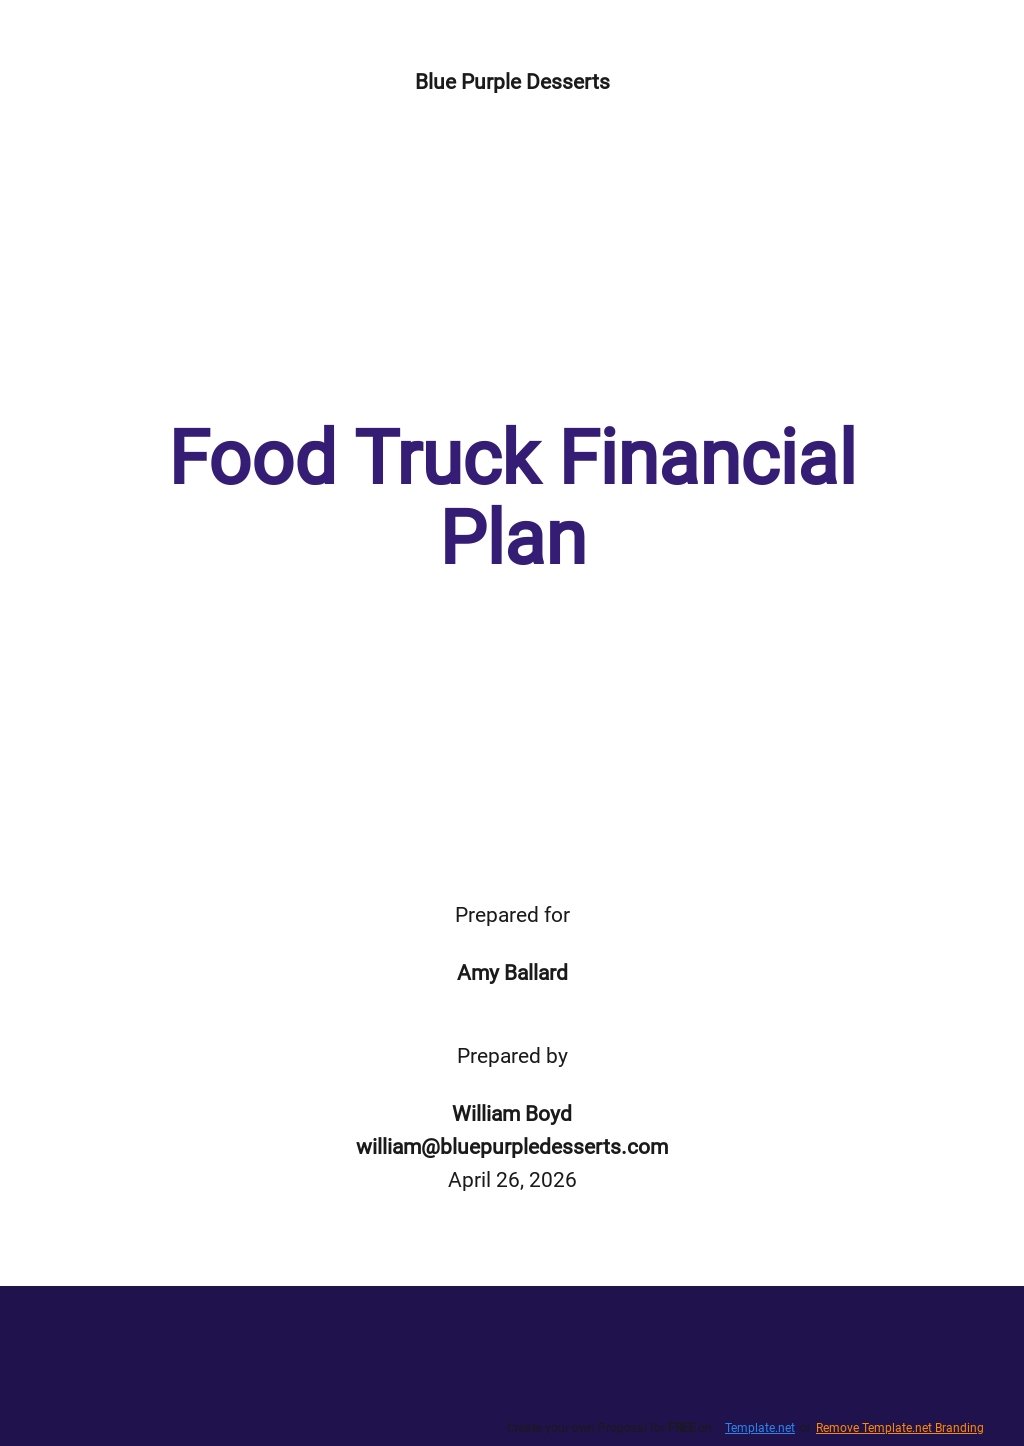 Food Truck Financial Plan Template